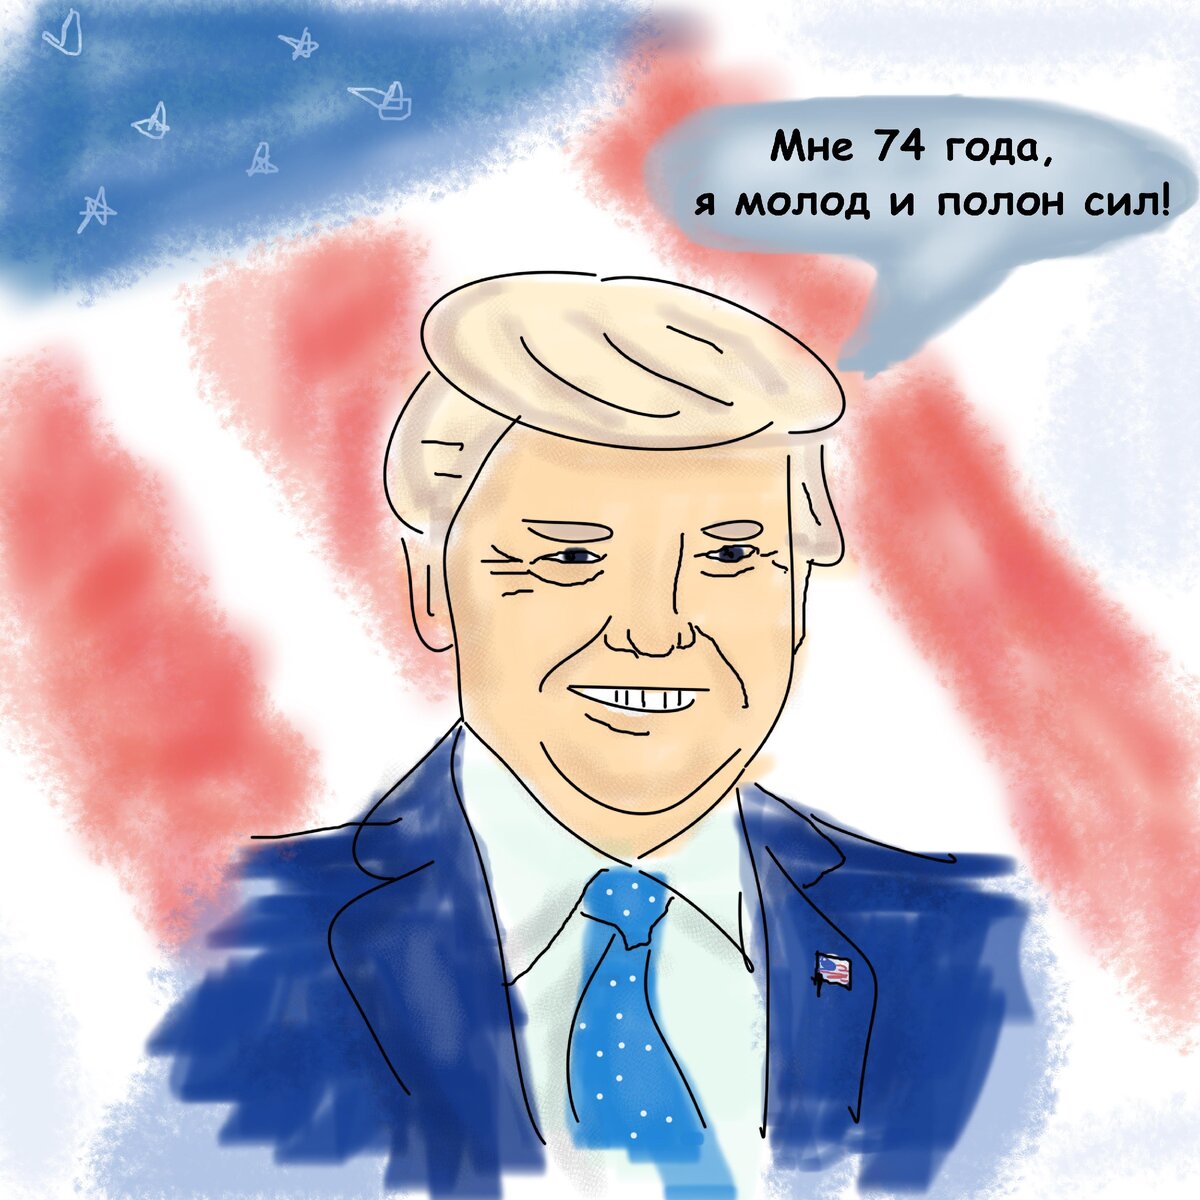 Дональд Трамп
Рисунок: моё